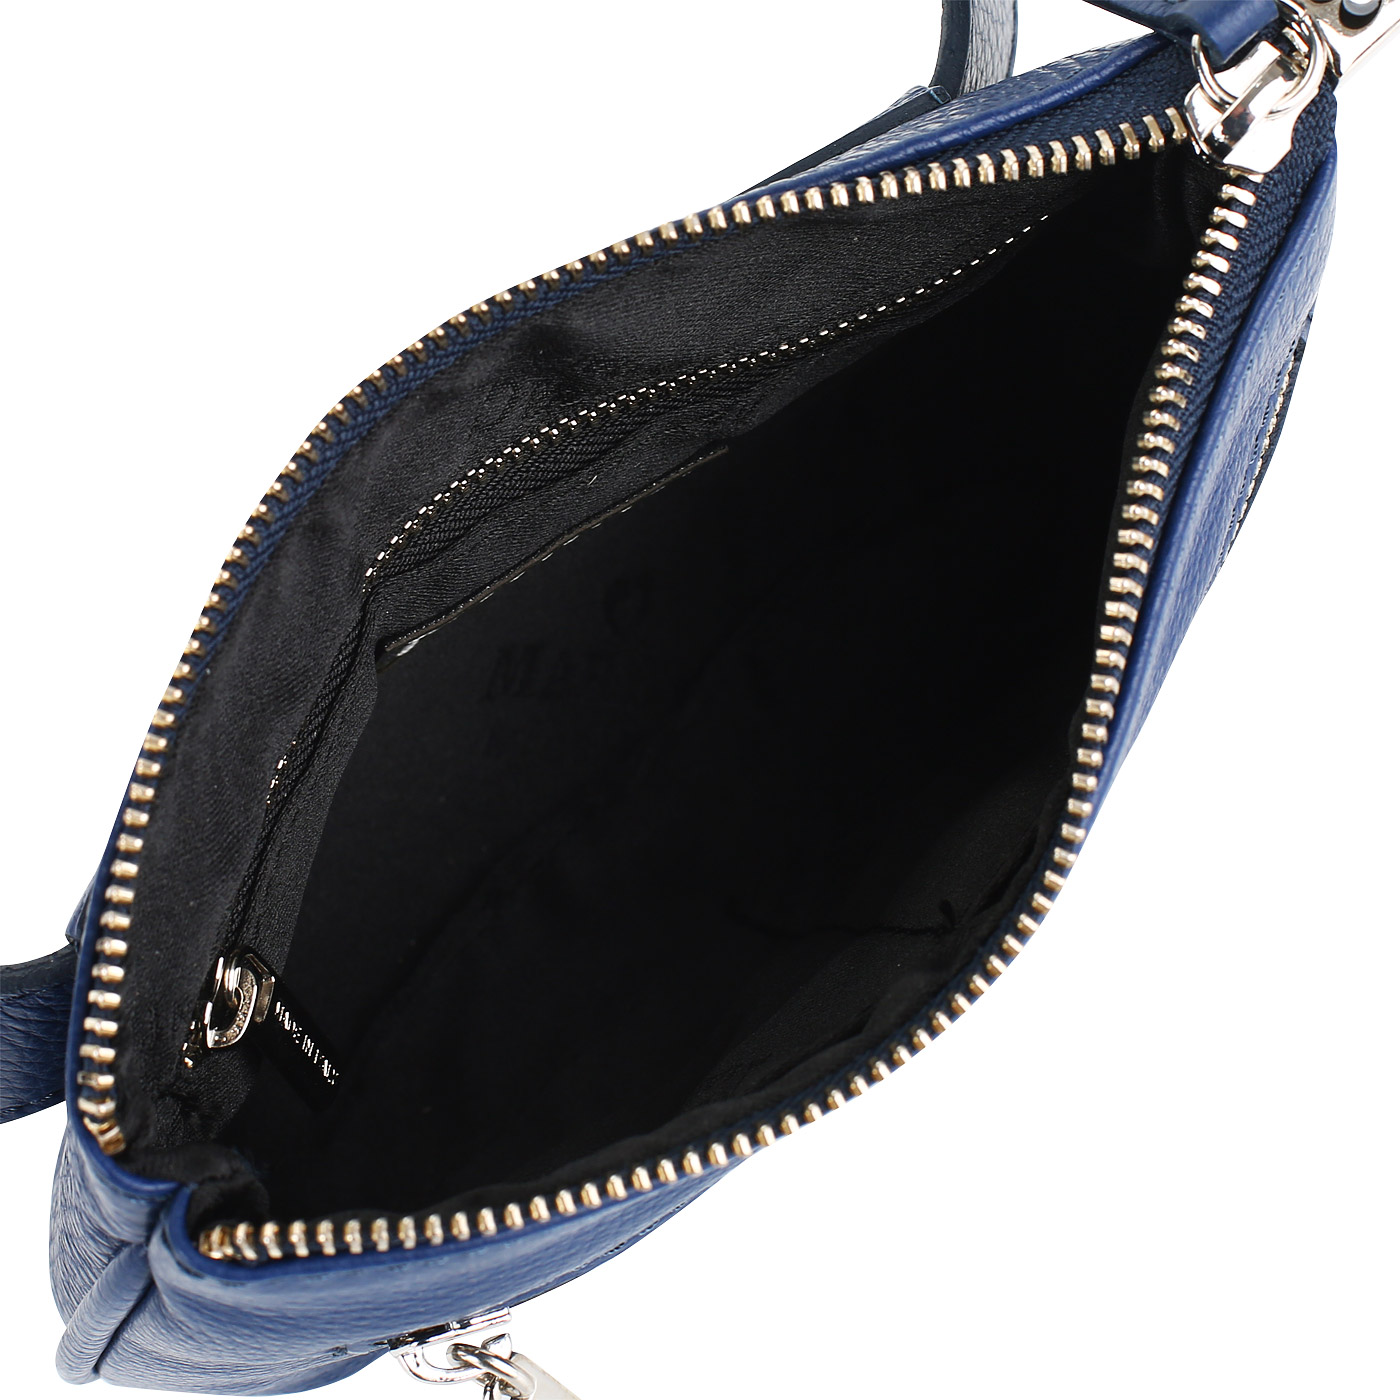 Поясная сумочка из синей кожи Marina Creazioni 